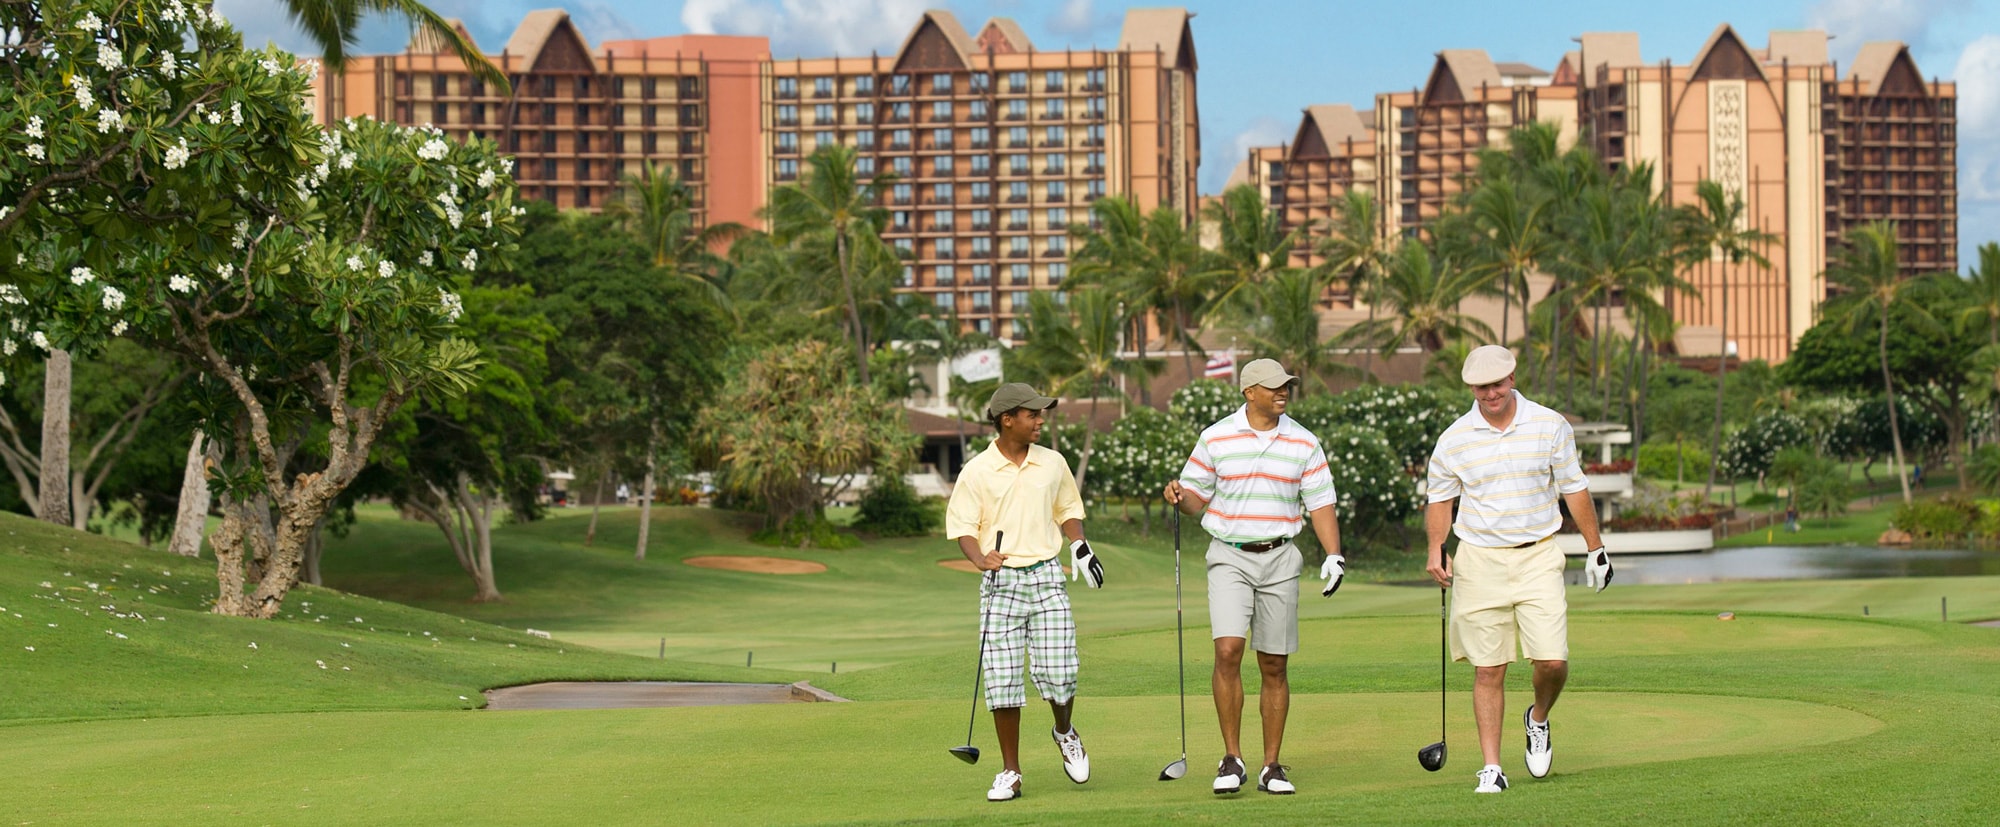 Three men in golf attire walk across the green, each carrying a golf club